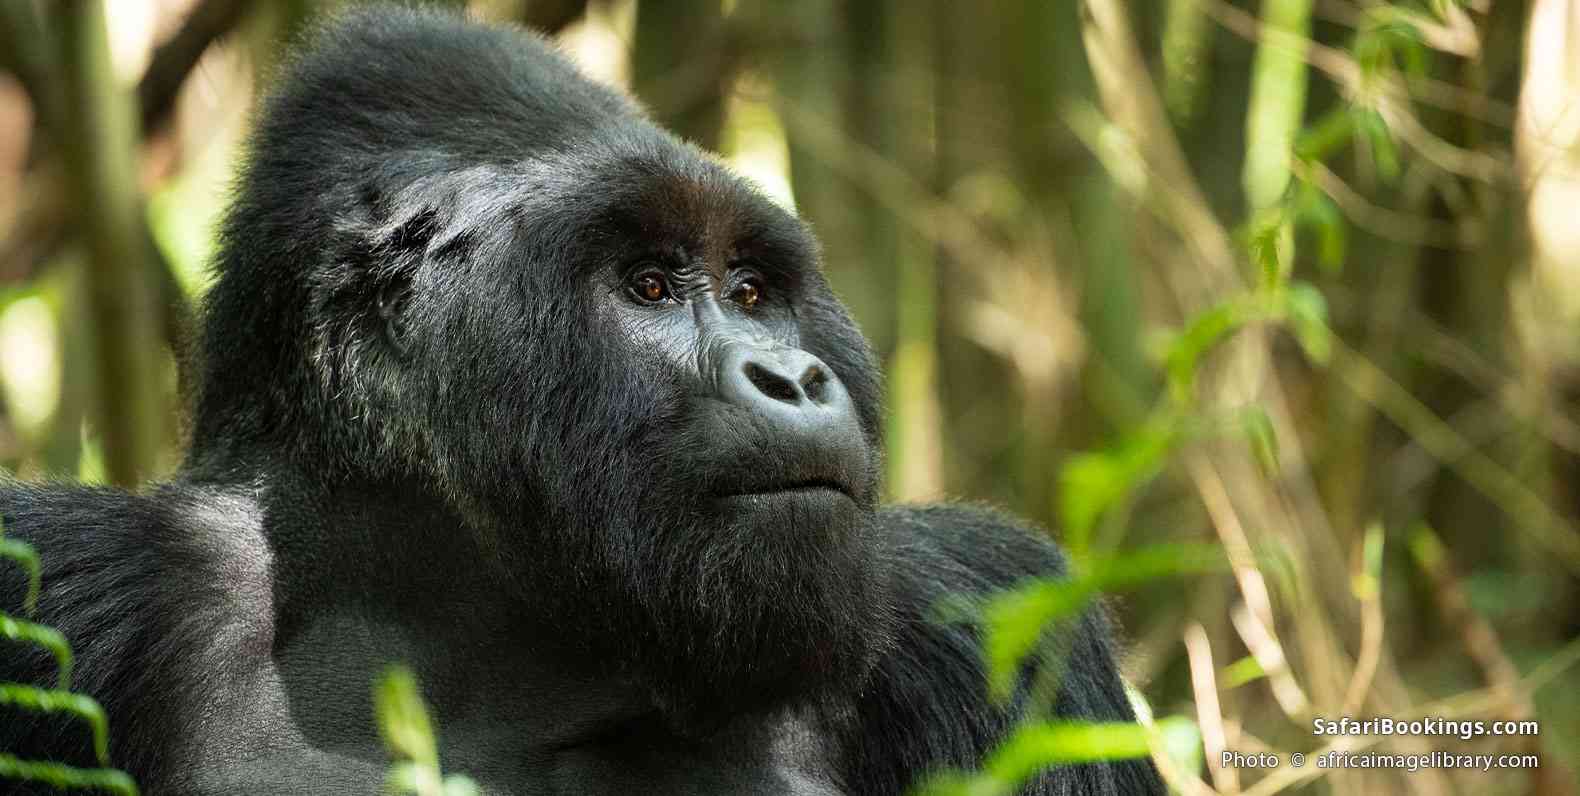 Silverback gorilla in Mgahinga Gorilla National Park